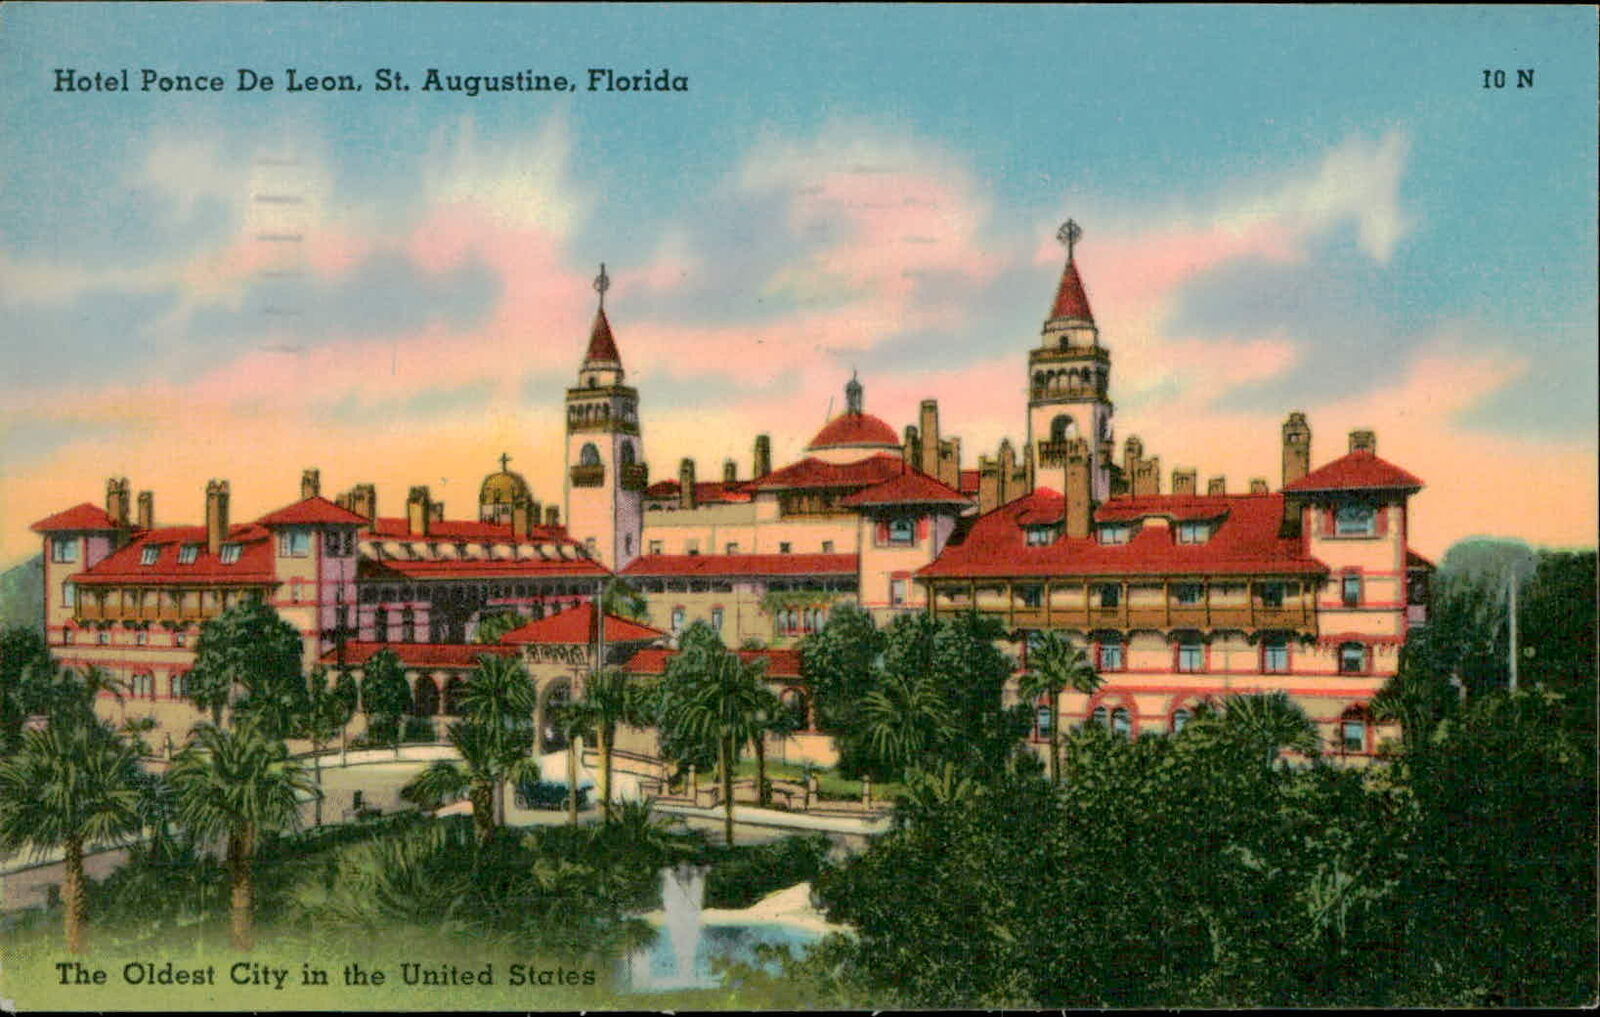 Postcard: Hotel Ponce De Leon, St. Augustine, Florida The Oldest City